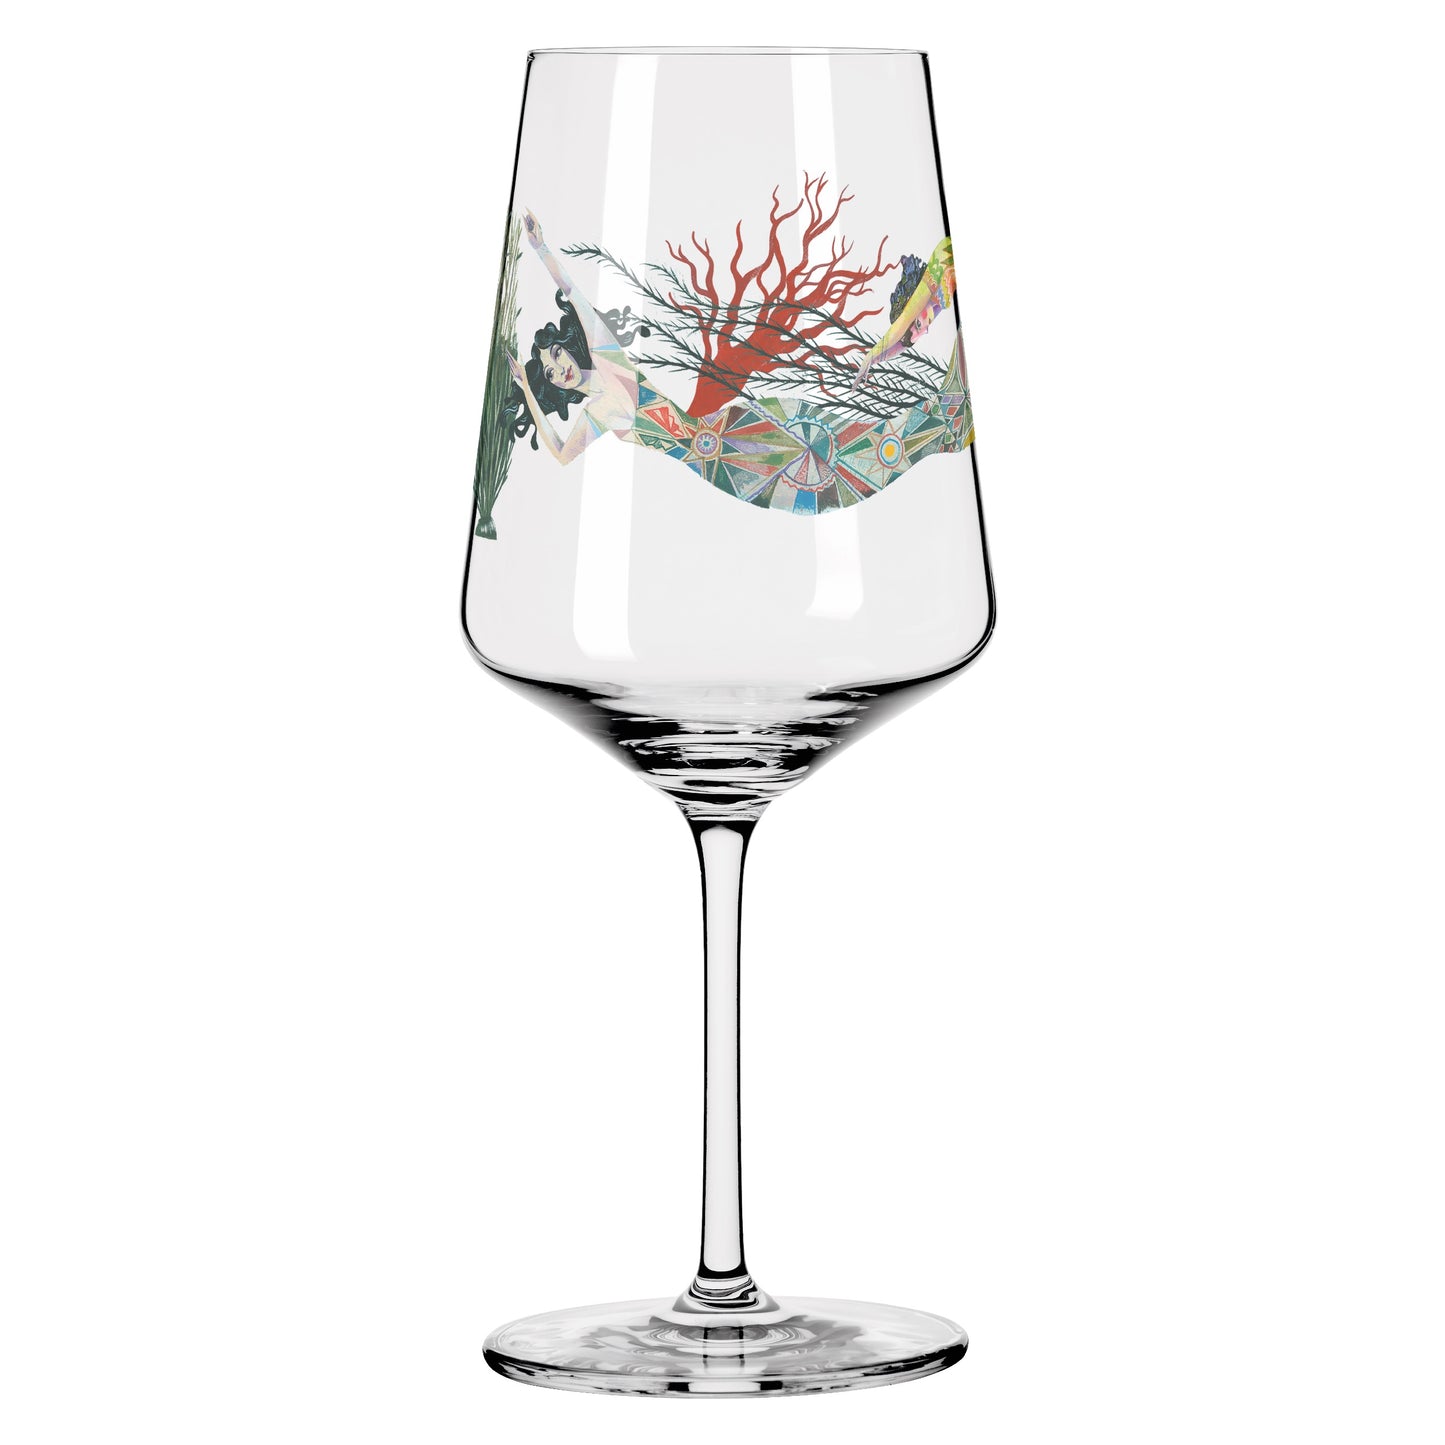 Sommerrausch #6, Cocktail Glass